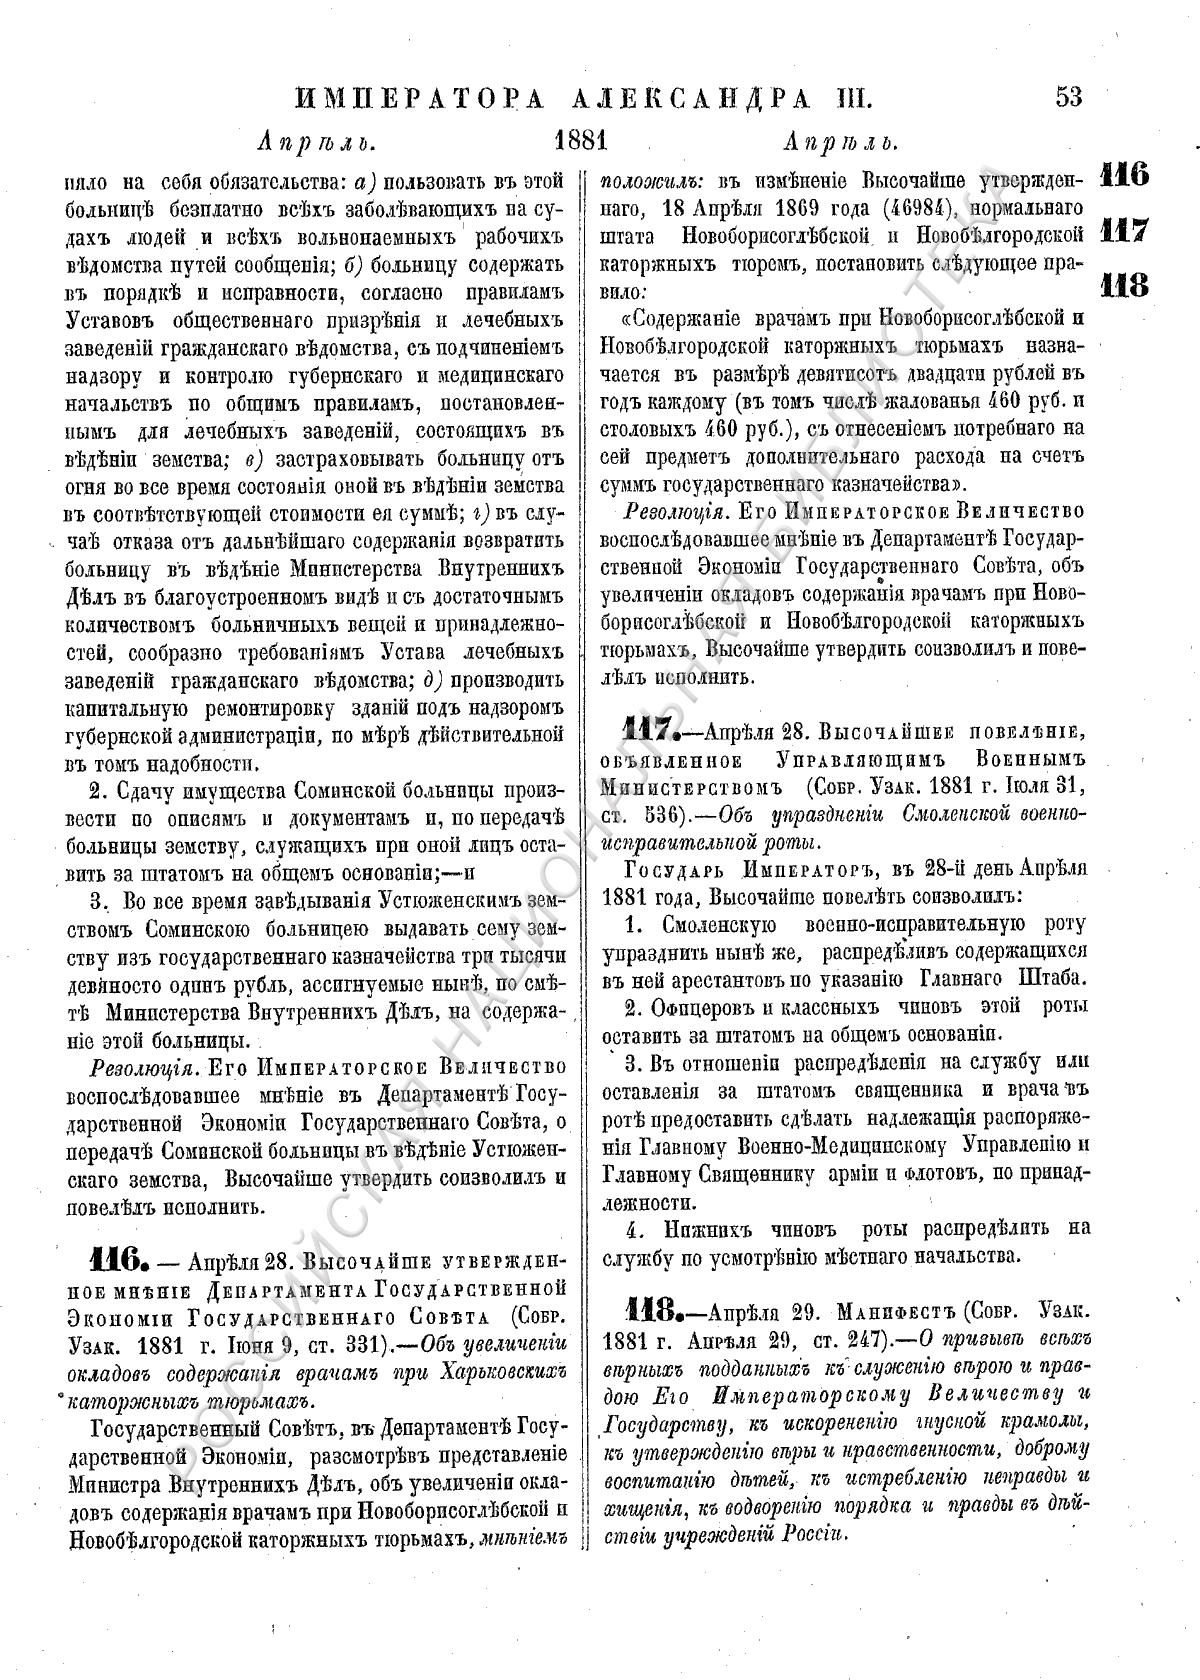 Манифест 29 апреля 1881 г.